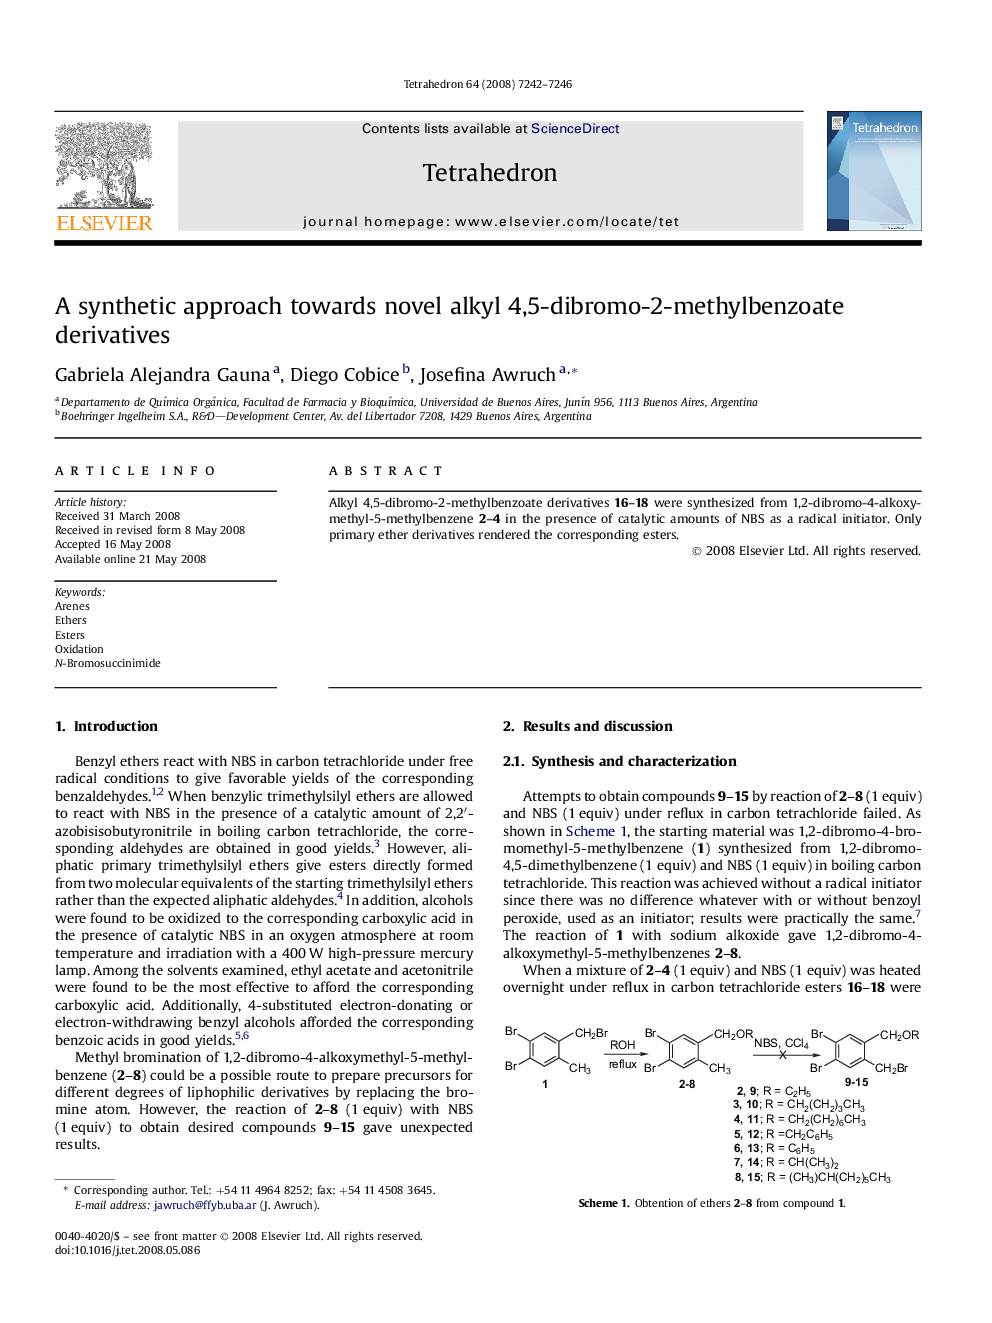 A synthetic approach towards novel alkyl 4,5-dibromo-2-methylbenzoate derivatives